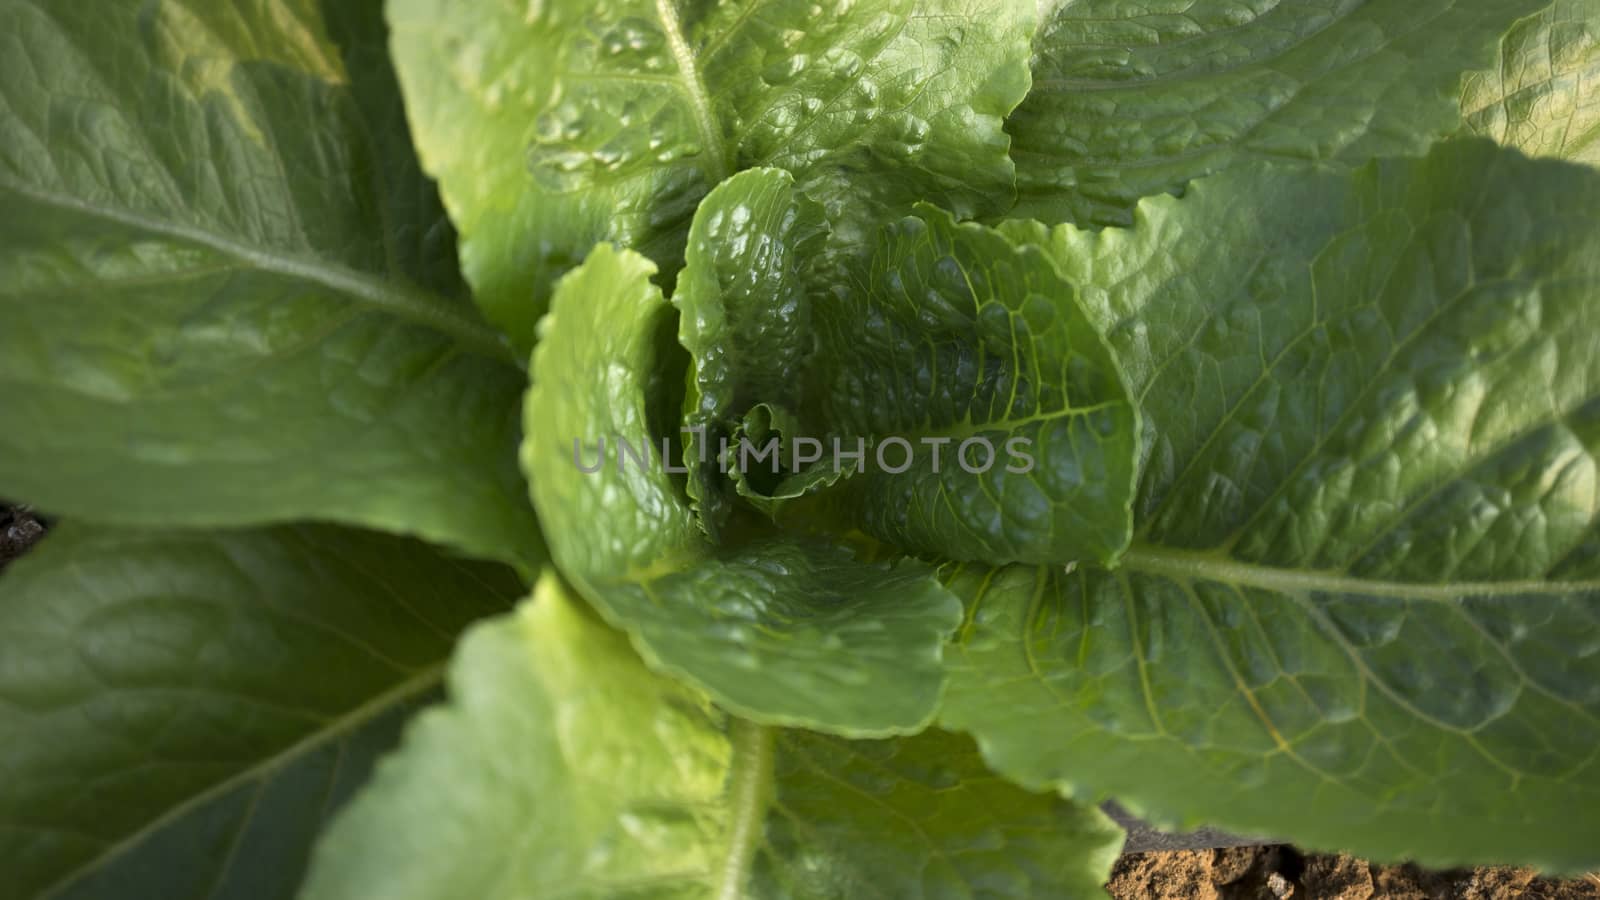 Lettuce by photosil